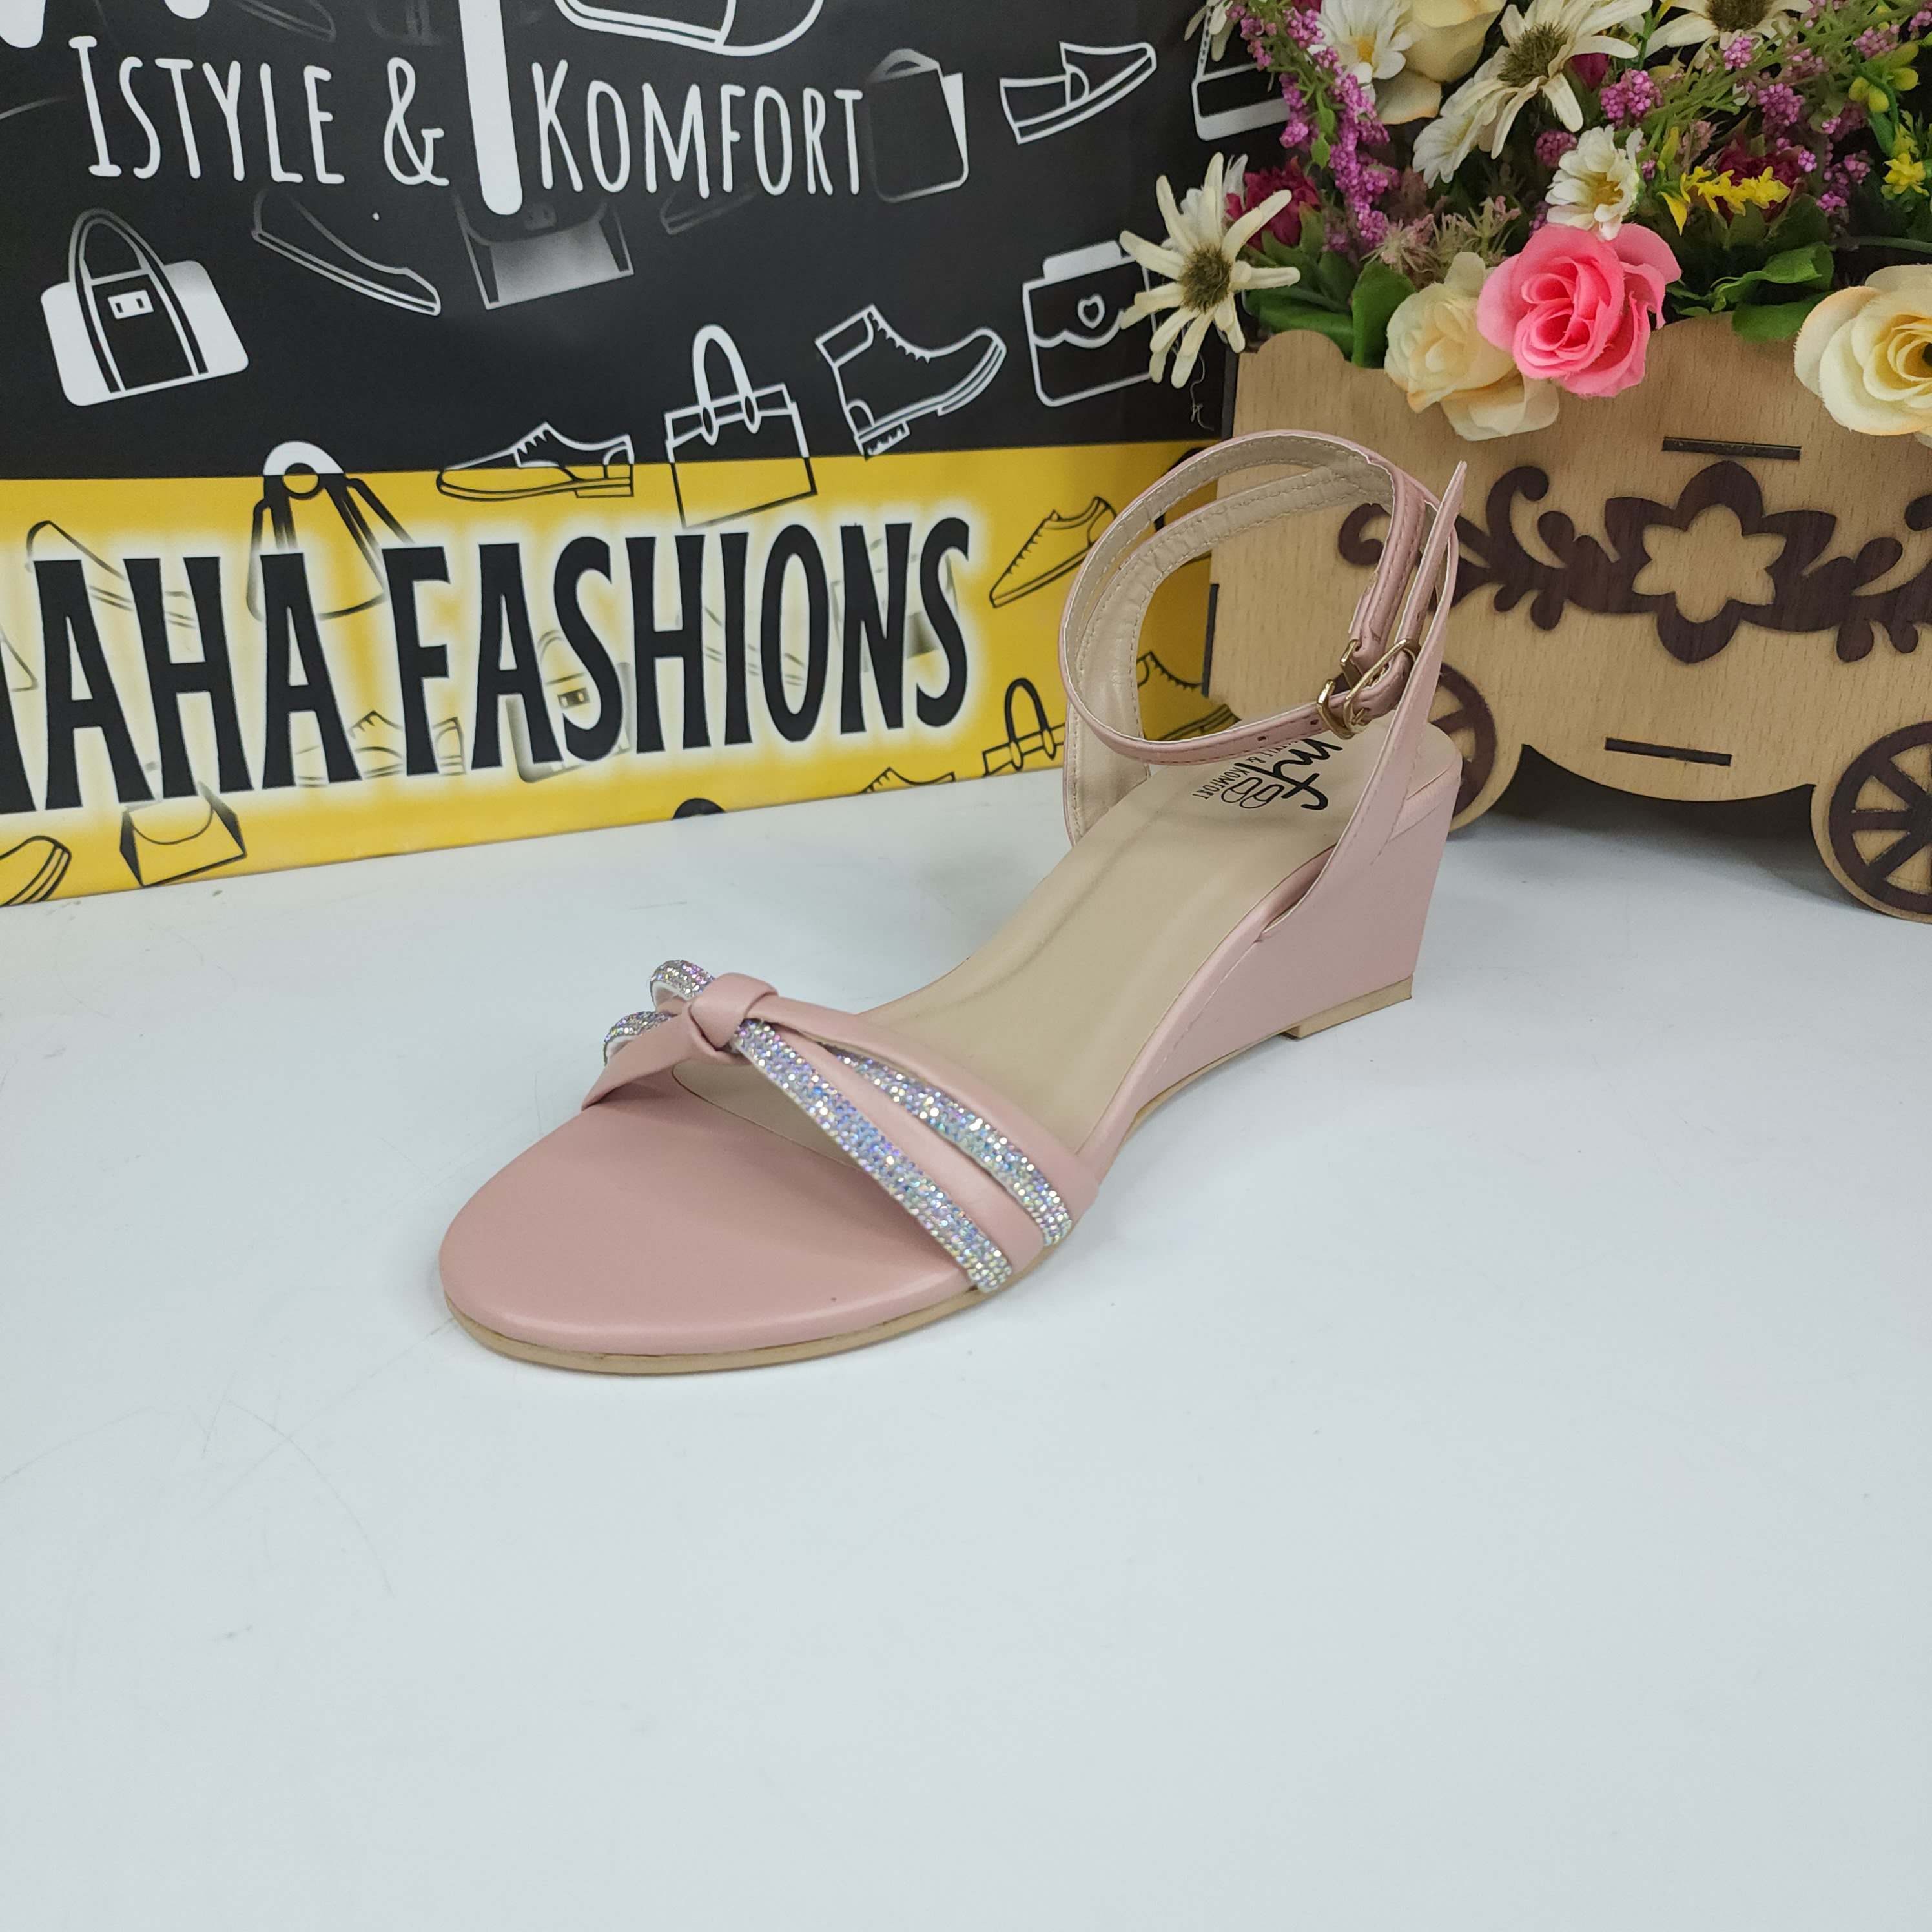 Pink Studs Sandals - Maha fashions -  Women Footwear